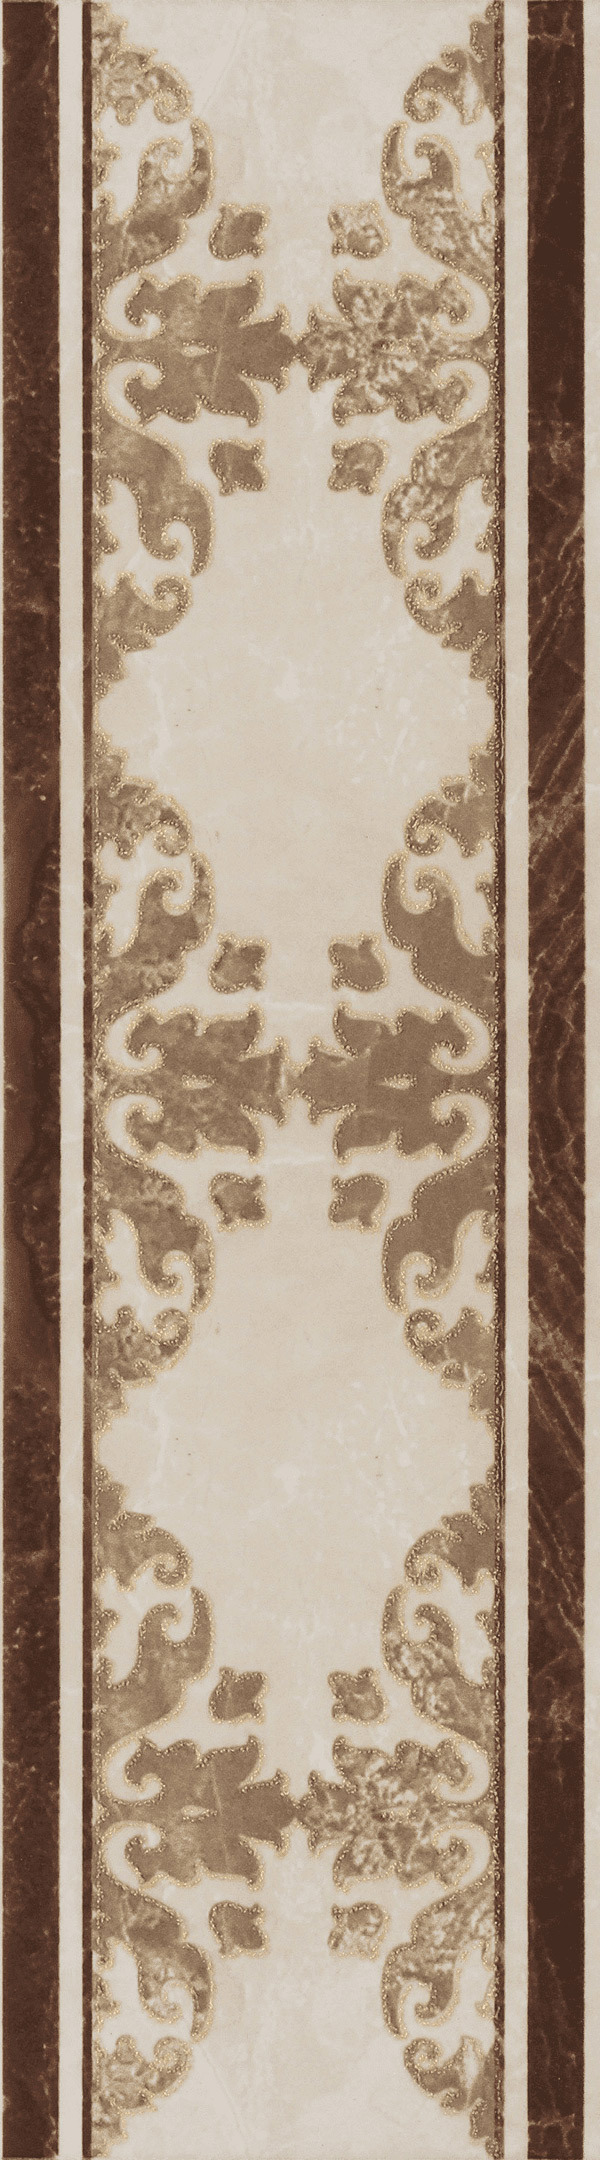 фото Плитка бордюр евро-керамика дельма коричневый 270x77x8 мм